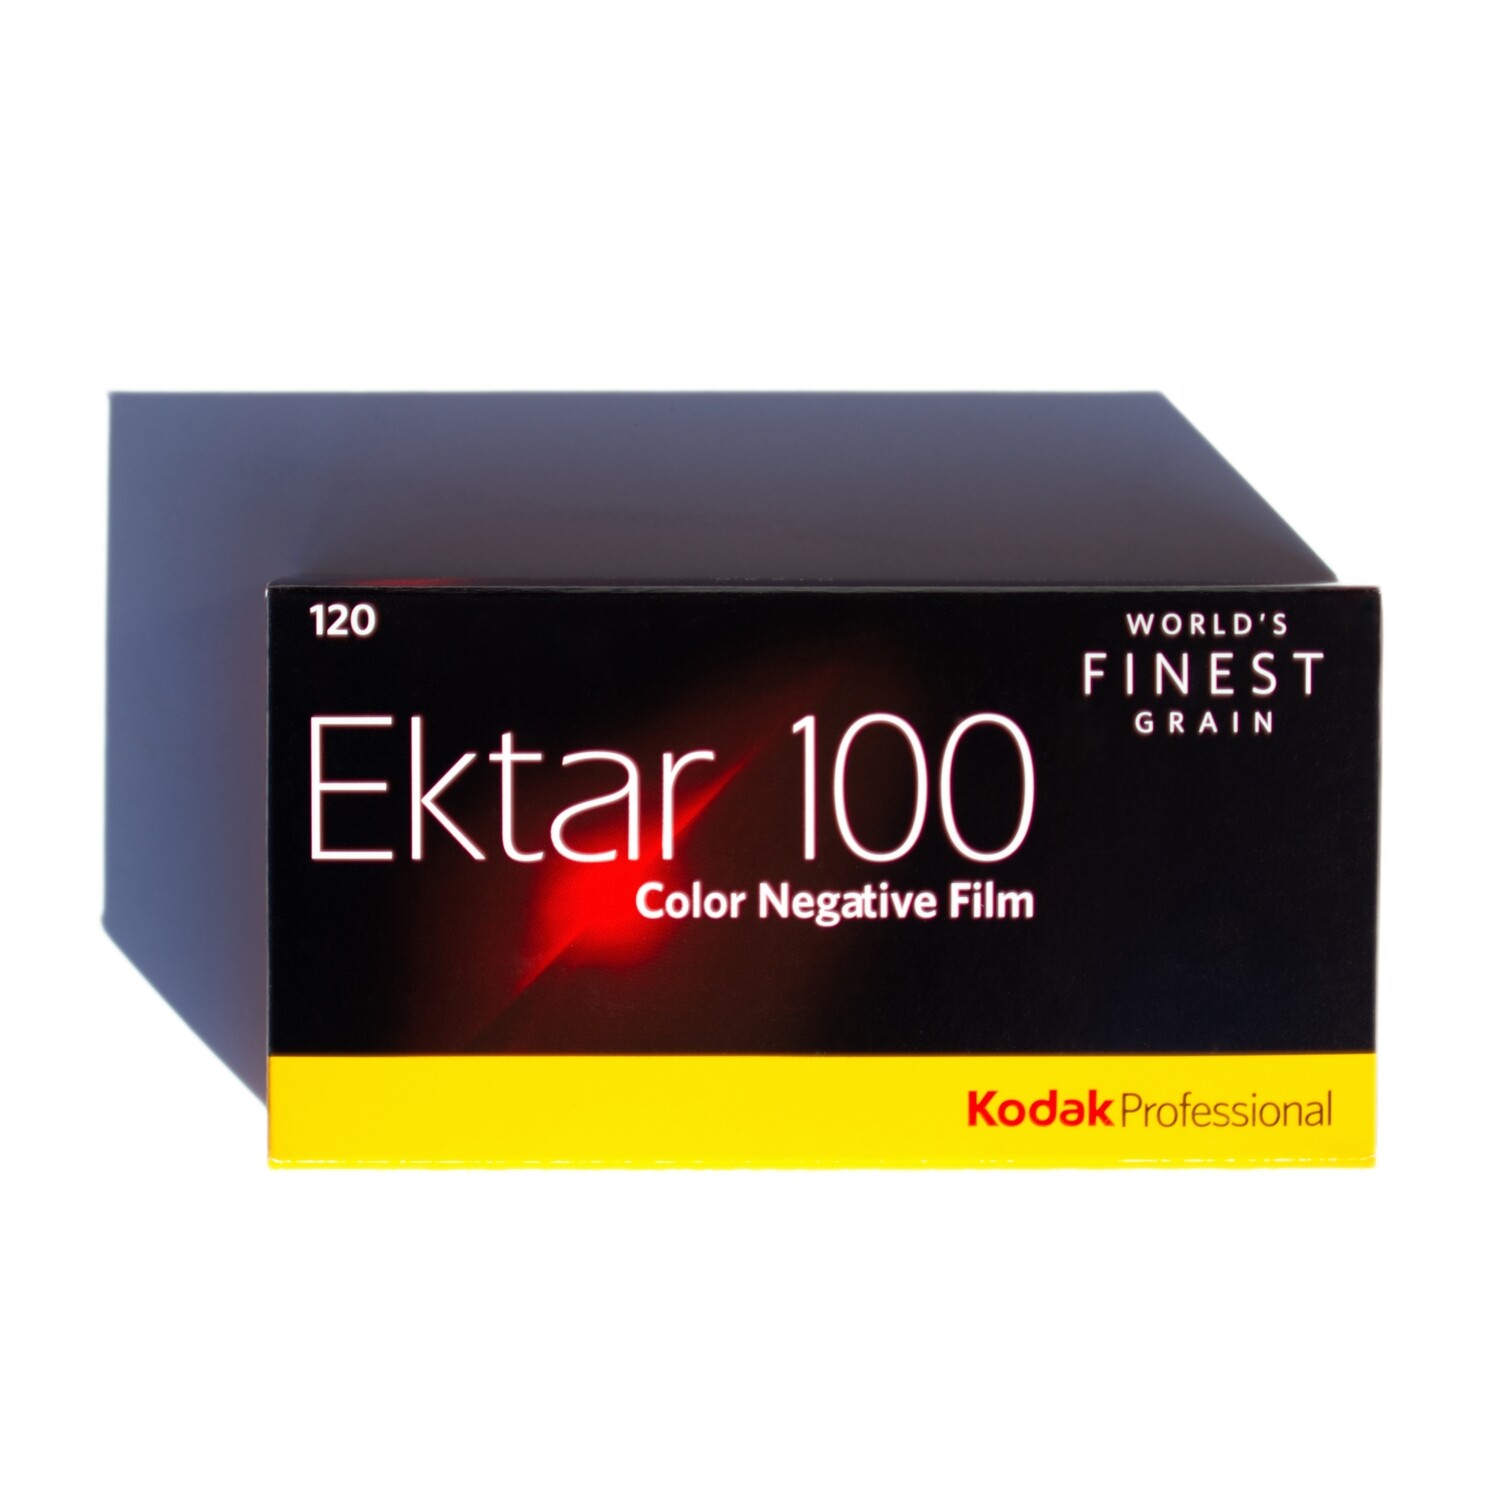 Kodak Professional Ektar 100 120